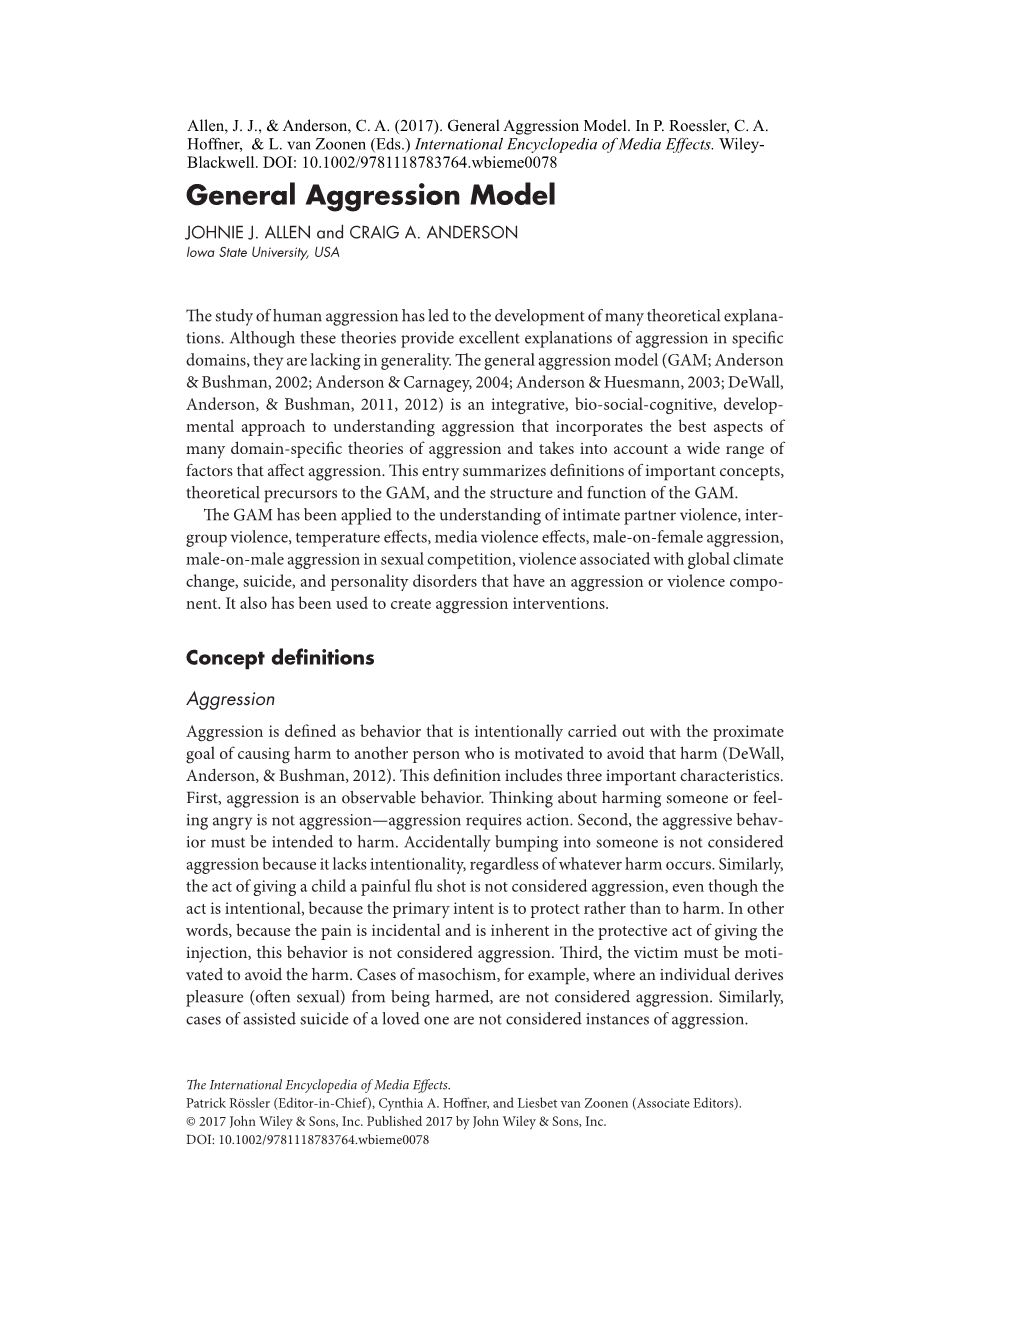 General Aggression Model